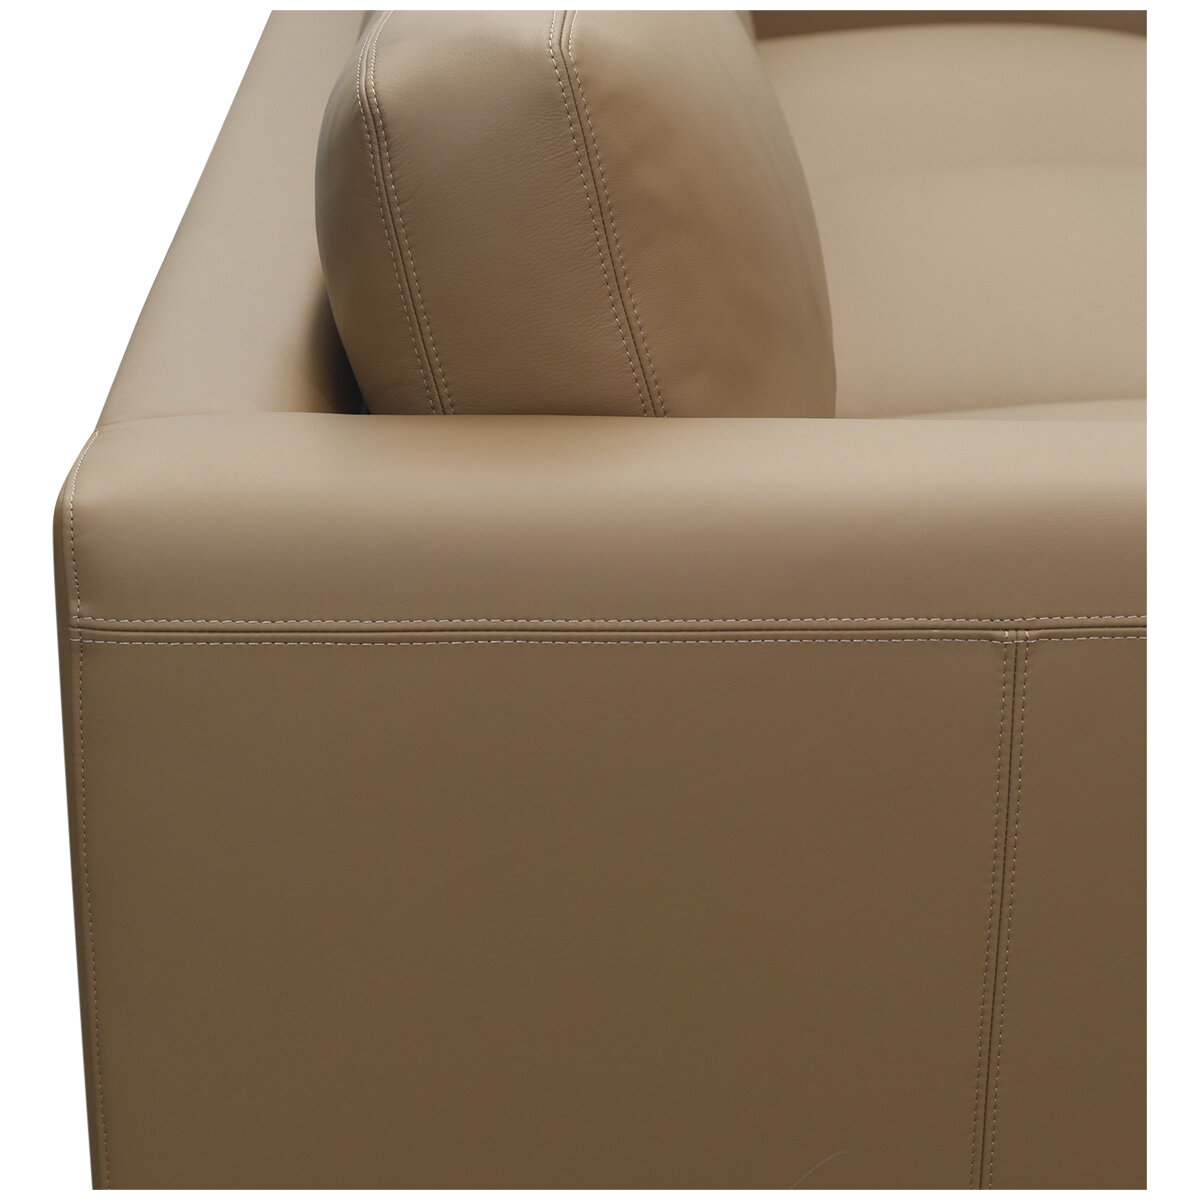 Moran Toronto Leather 3 Seater Sofa Premium Caramel